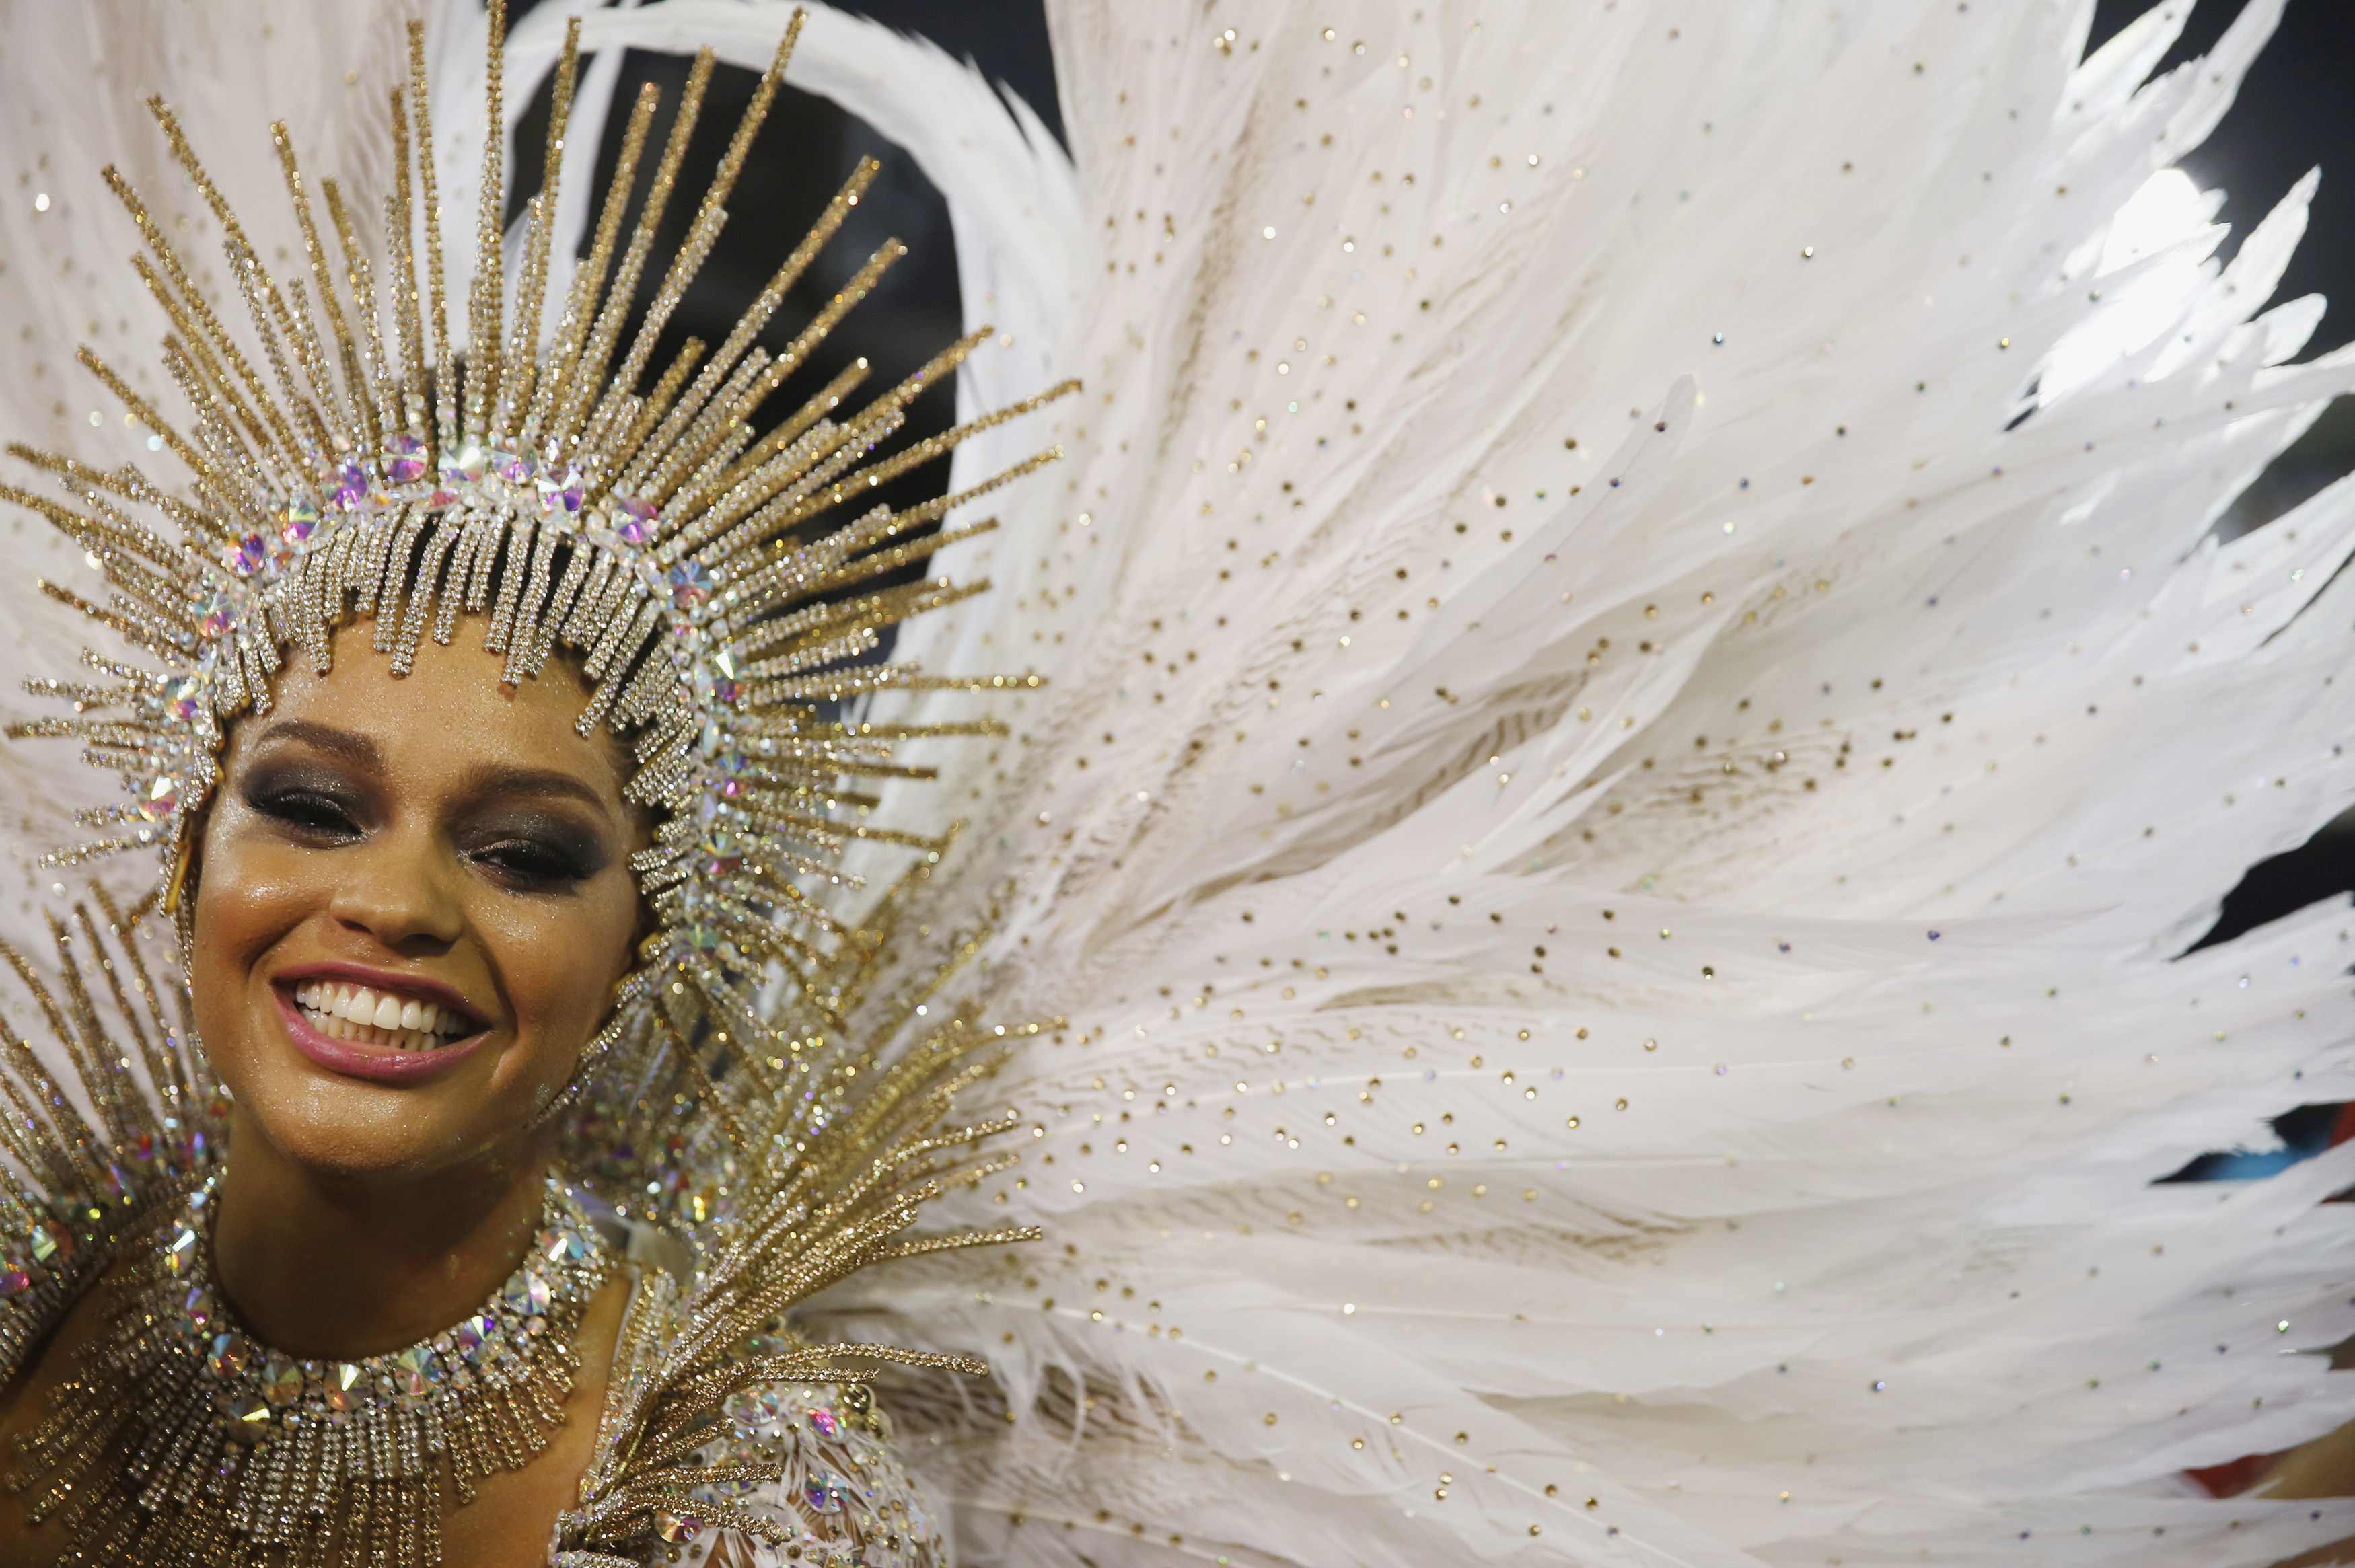 Top 25 Photos Of The Sexy Semi Naked Brazilian Samba Dancers From Rio Carnival 2015